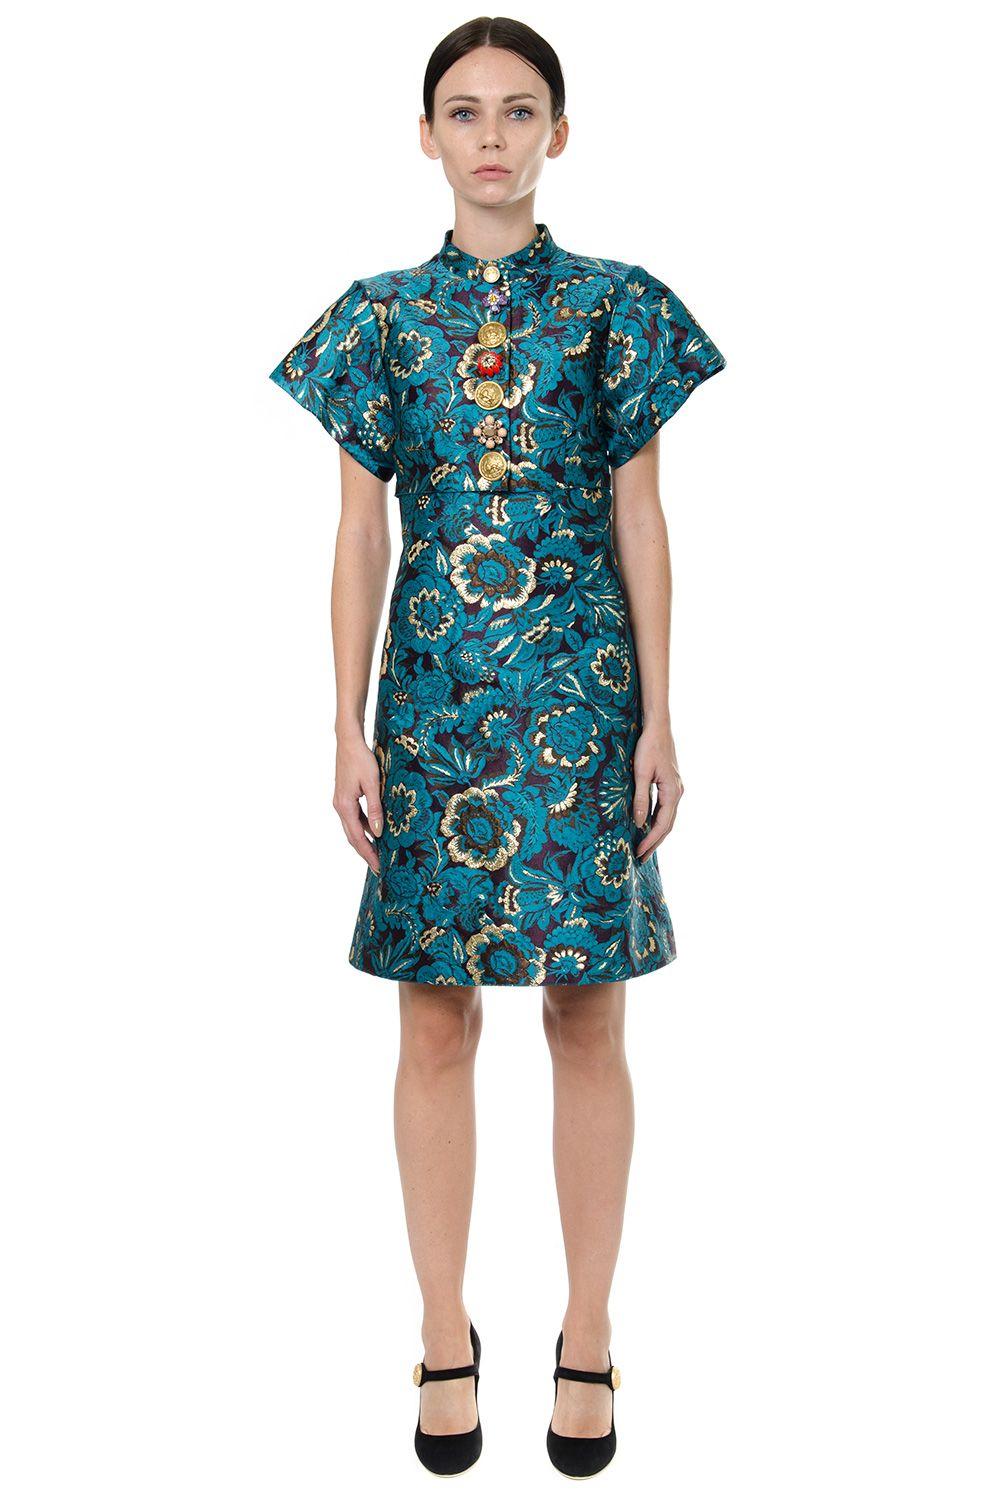 Dolce & Gabbana Floral Printed Jacquard Dress | ModeSens